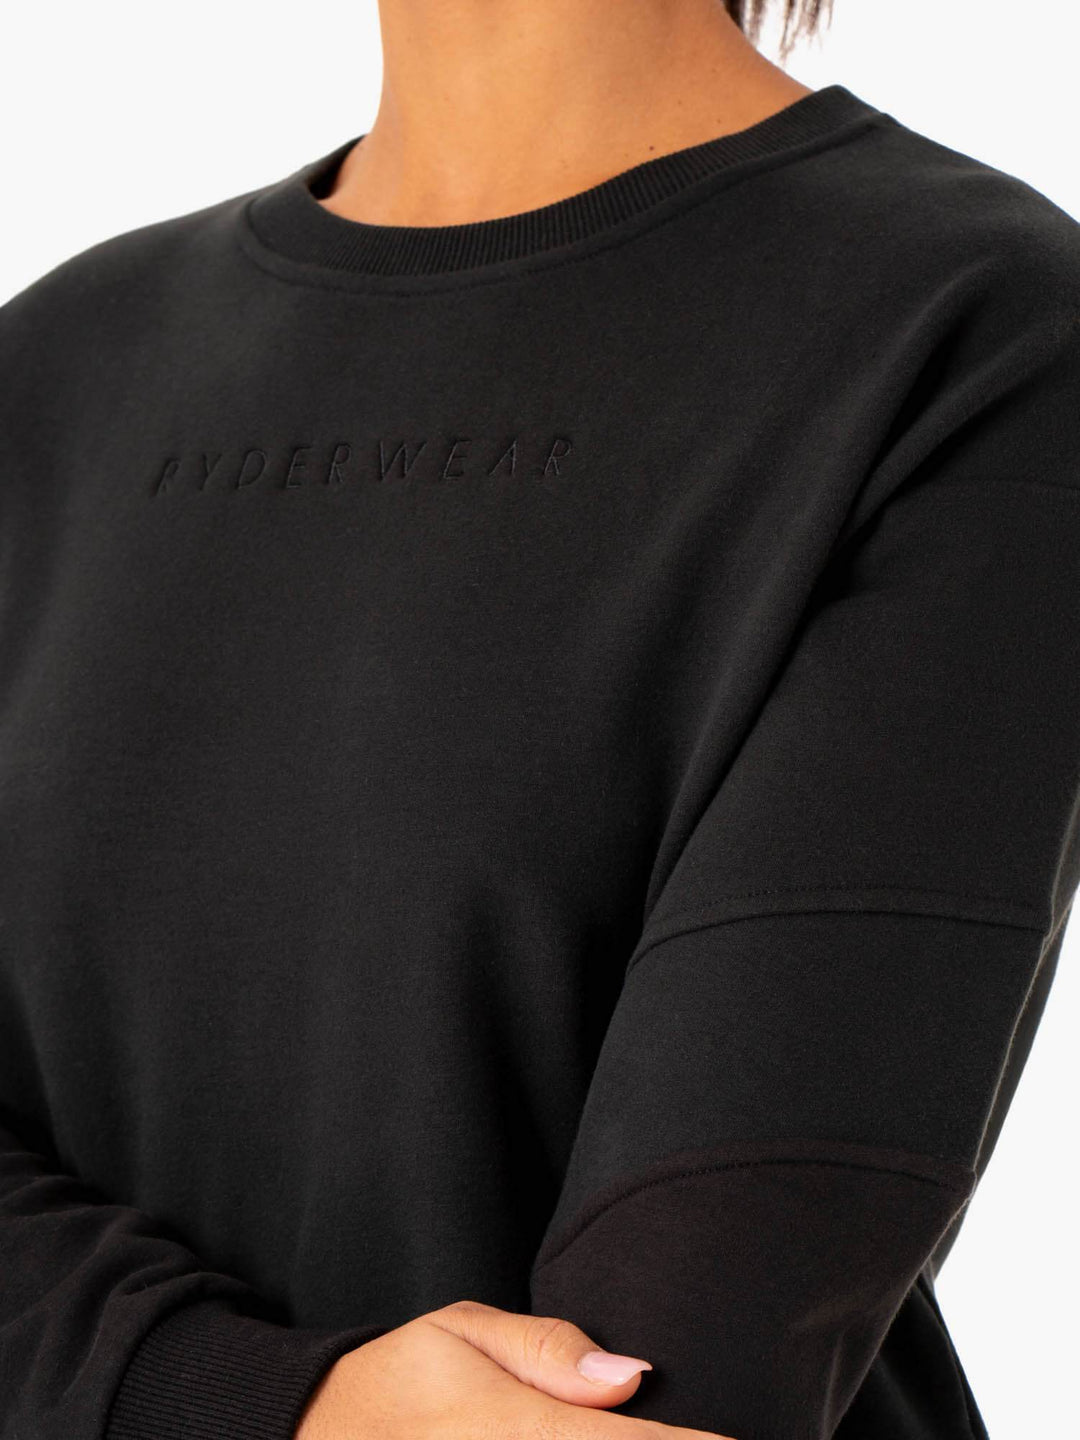 Hybrid Pullover Jumper - Black/Charcoal - Ryderwear